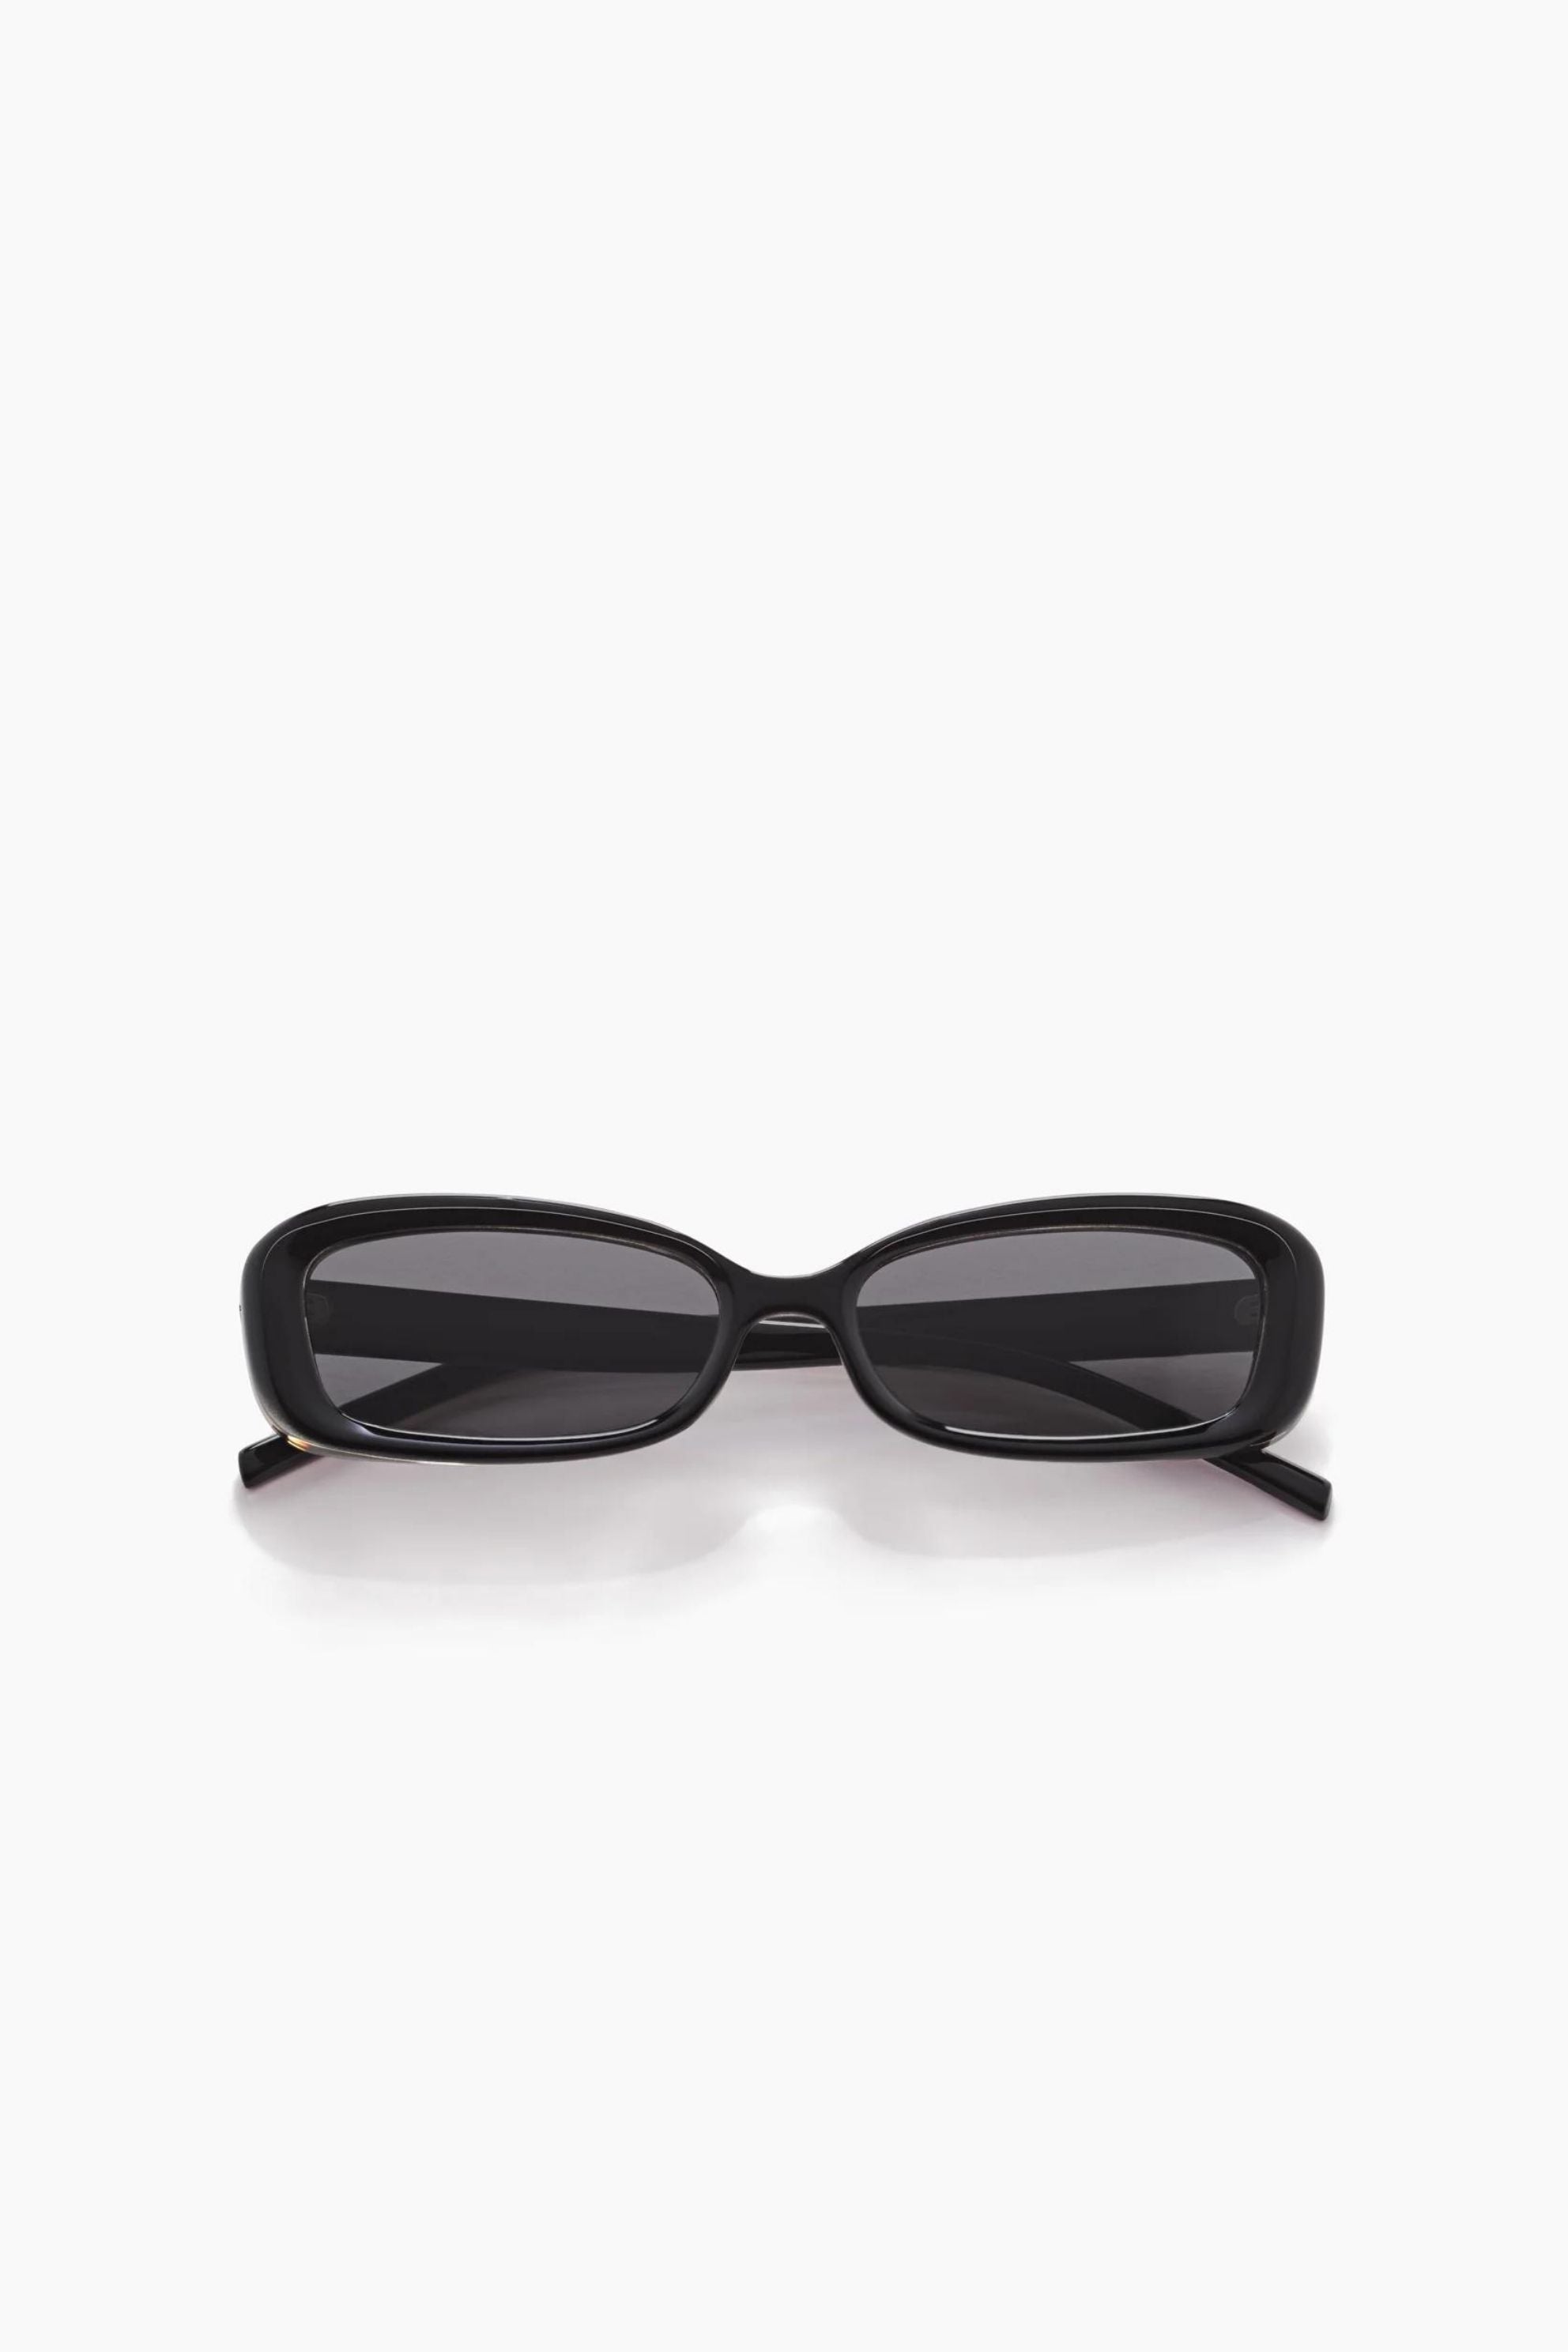 Page Sunglasses Elysium Double Black / Ink